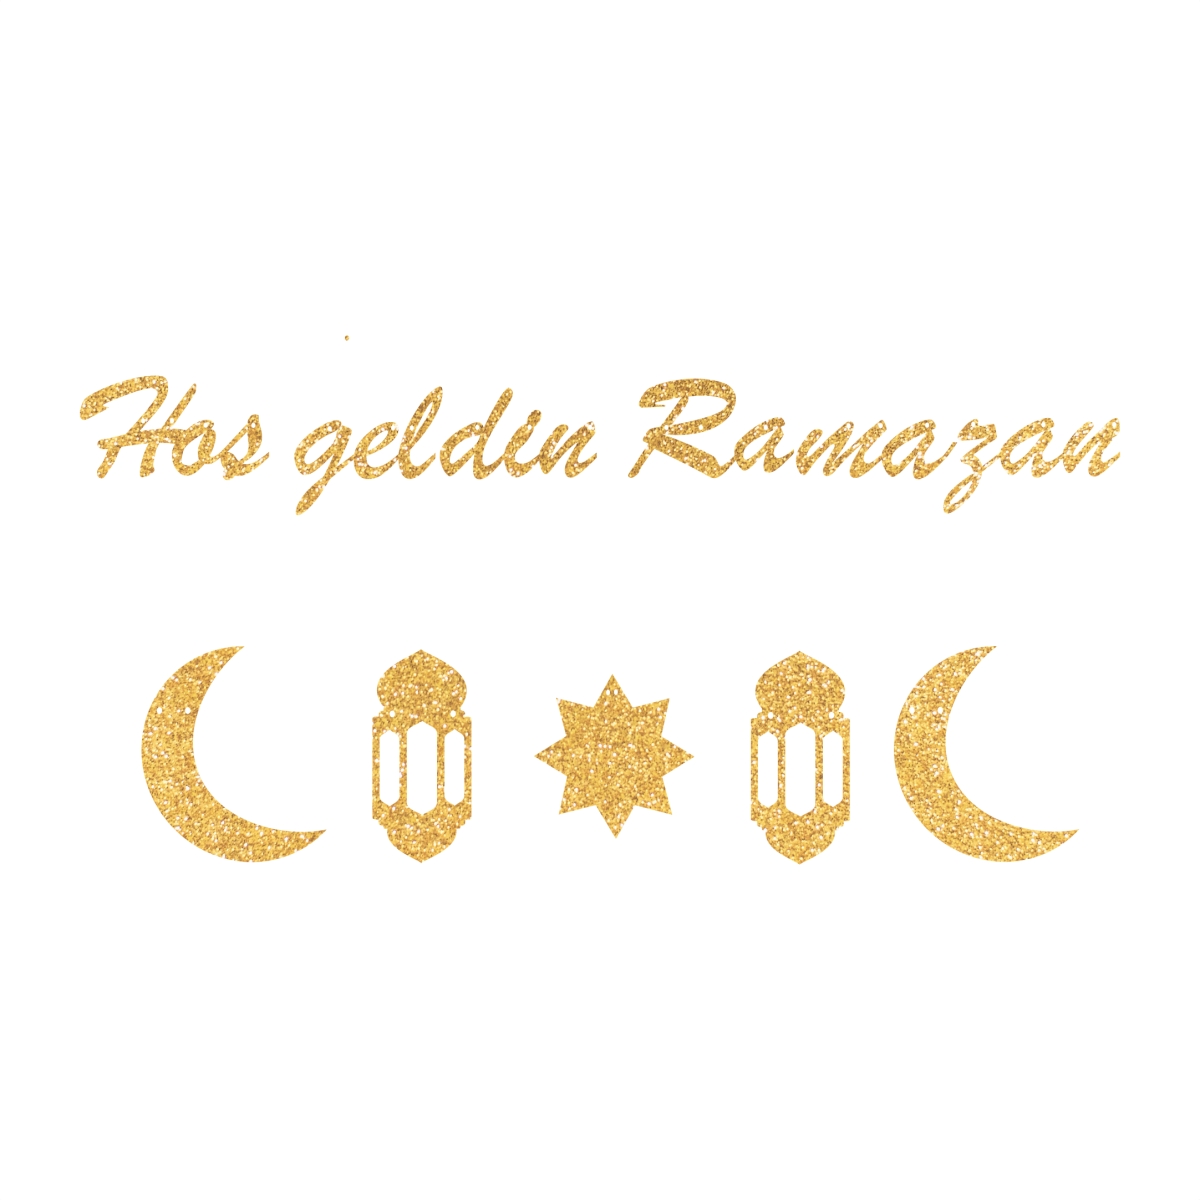 Hoş geldin Ramazan Girlande - Schreibschrift